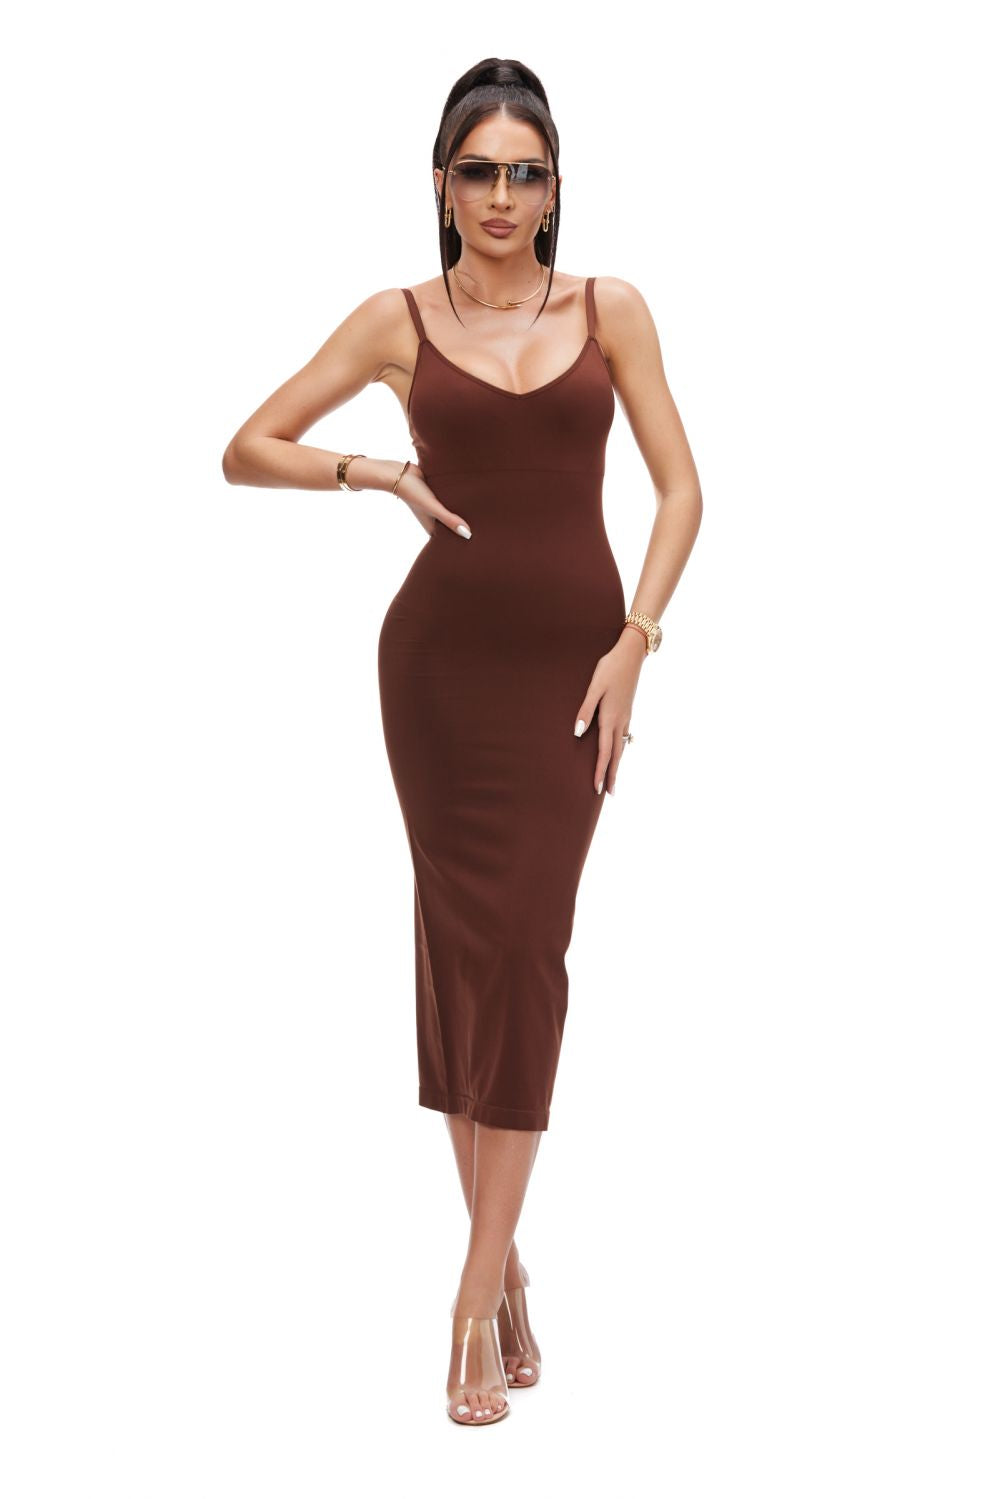 Lybras Bogas brown modeling casual dress for women